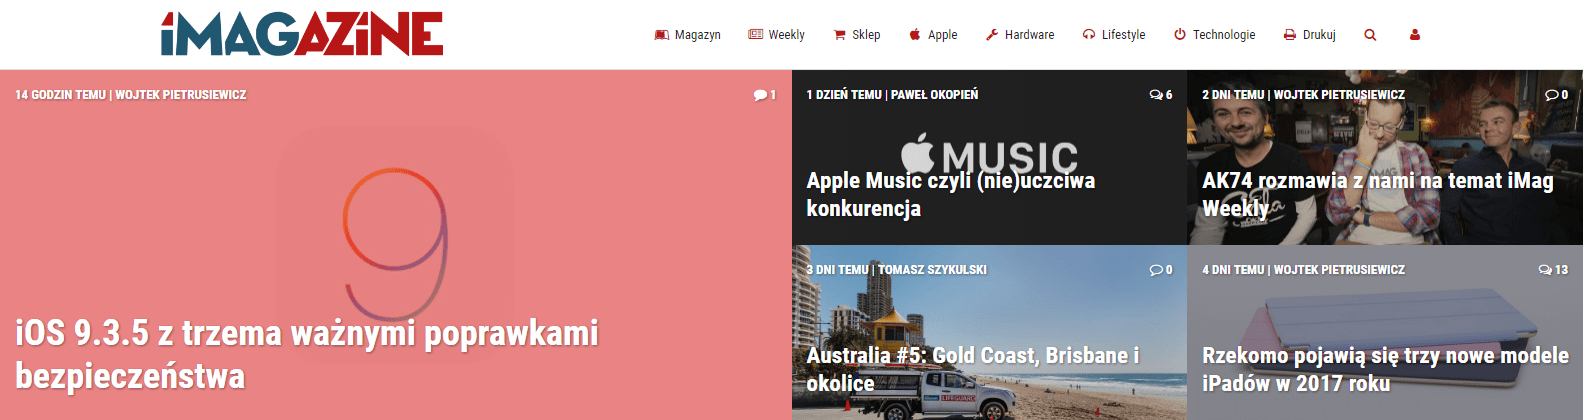 screenshot-imagazine.pl